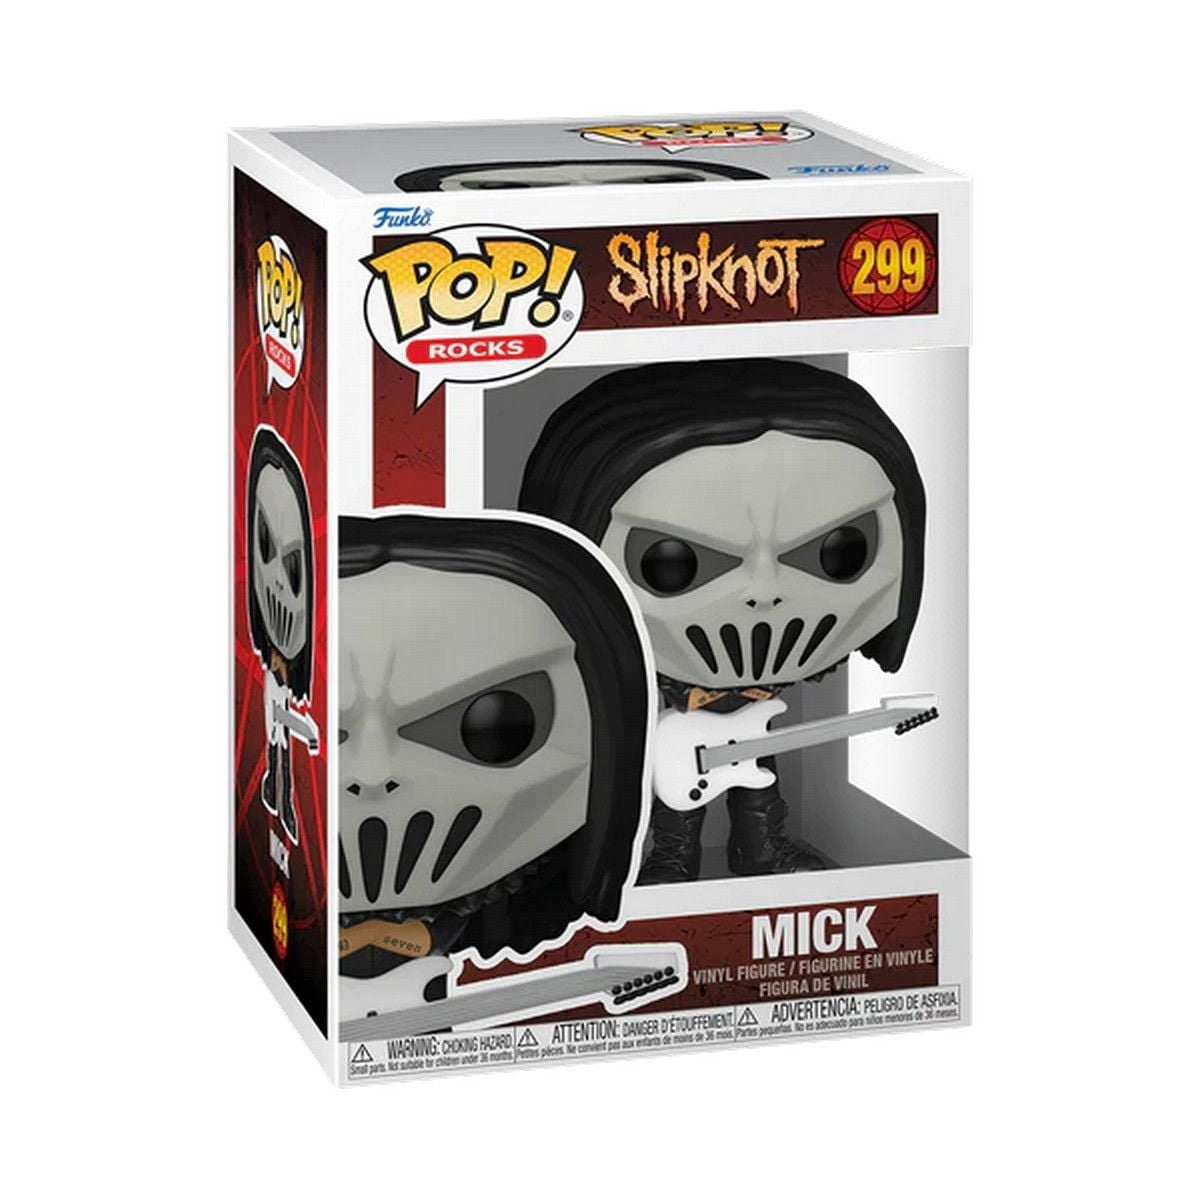 Mick - Slipknot - Funko POP! Rocks (299)